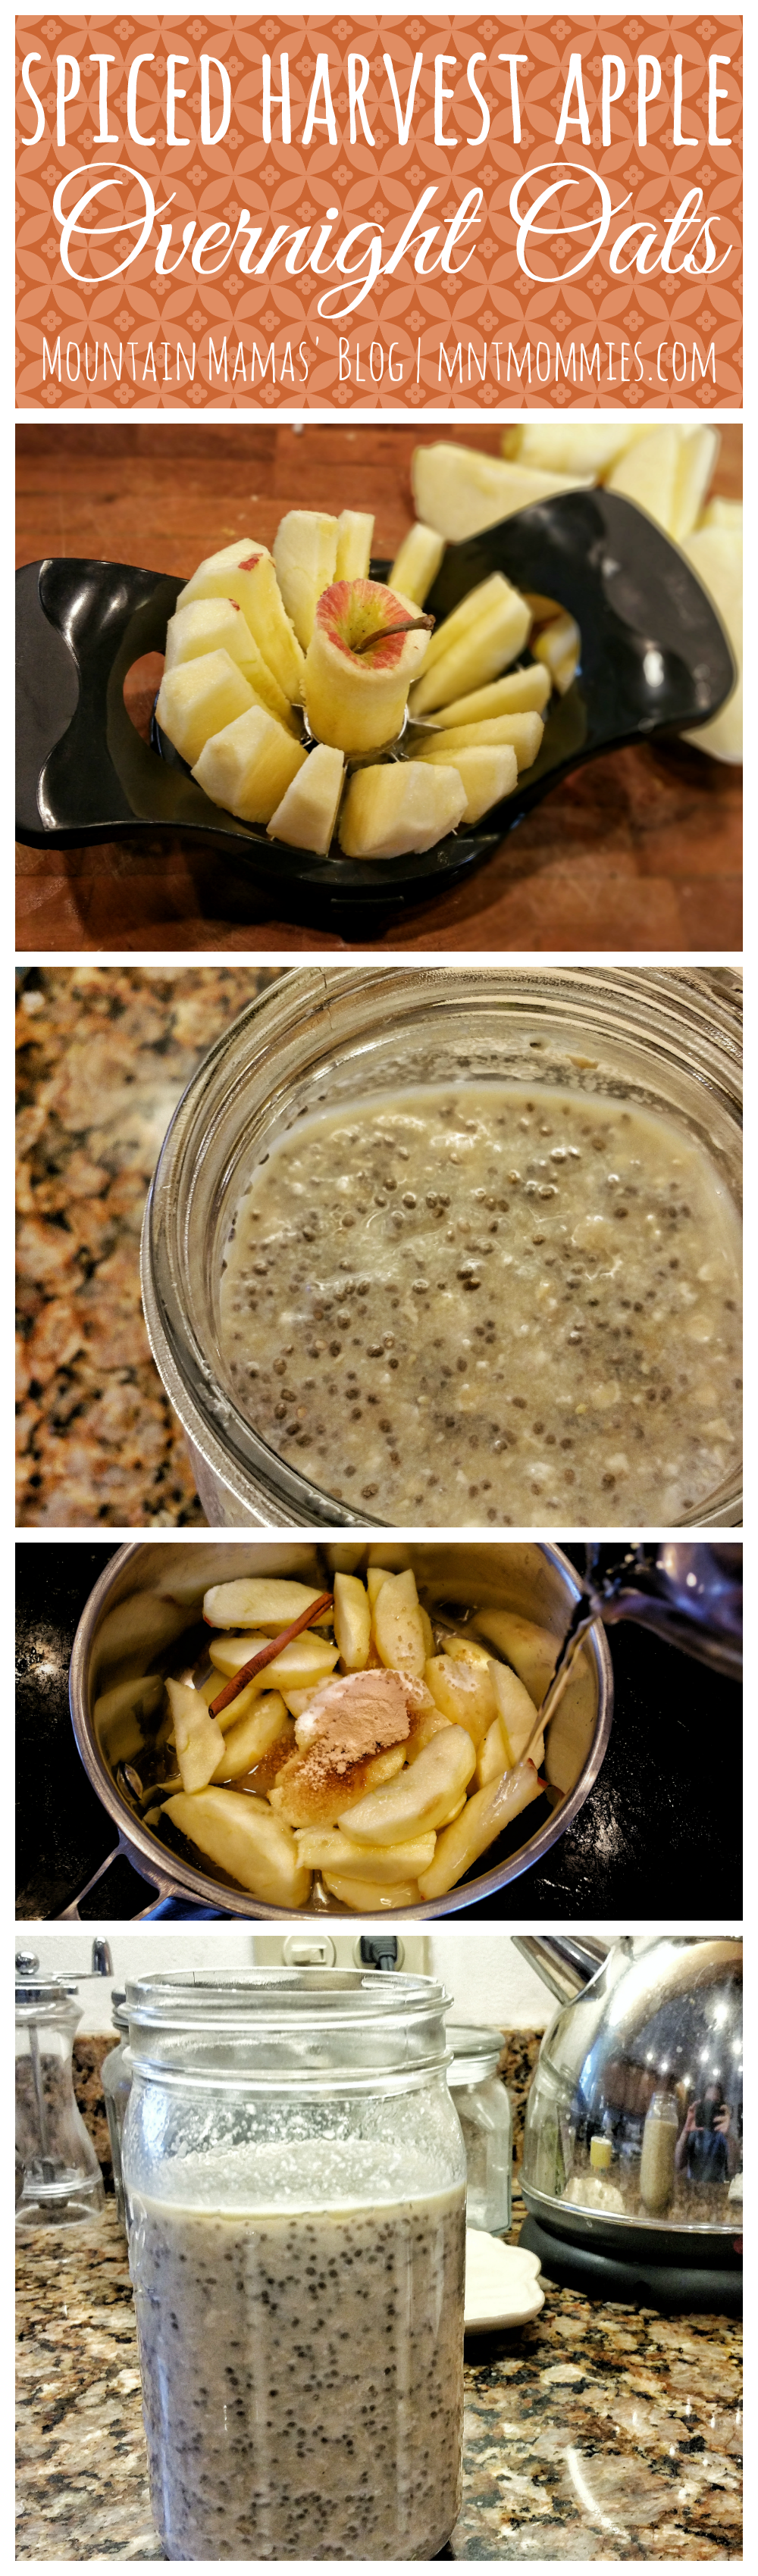 Spiced Harvest Apple Overnight Oats Breakfast Recipe | Mountain Mamas' Blog | mntmommies.com